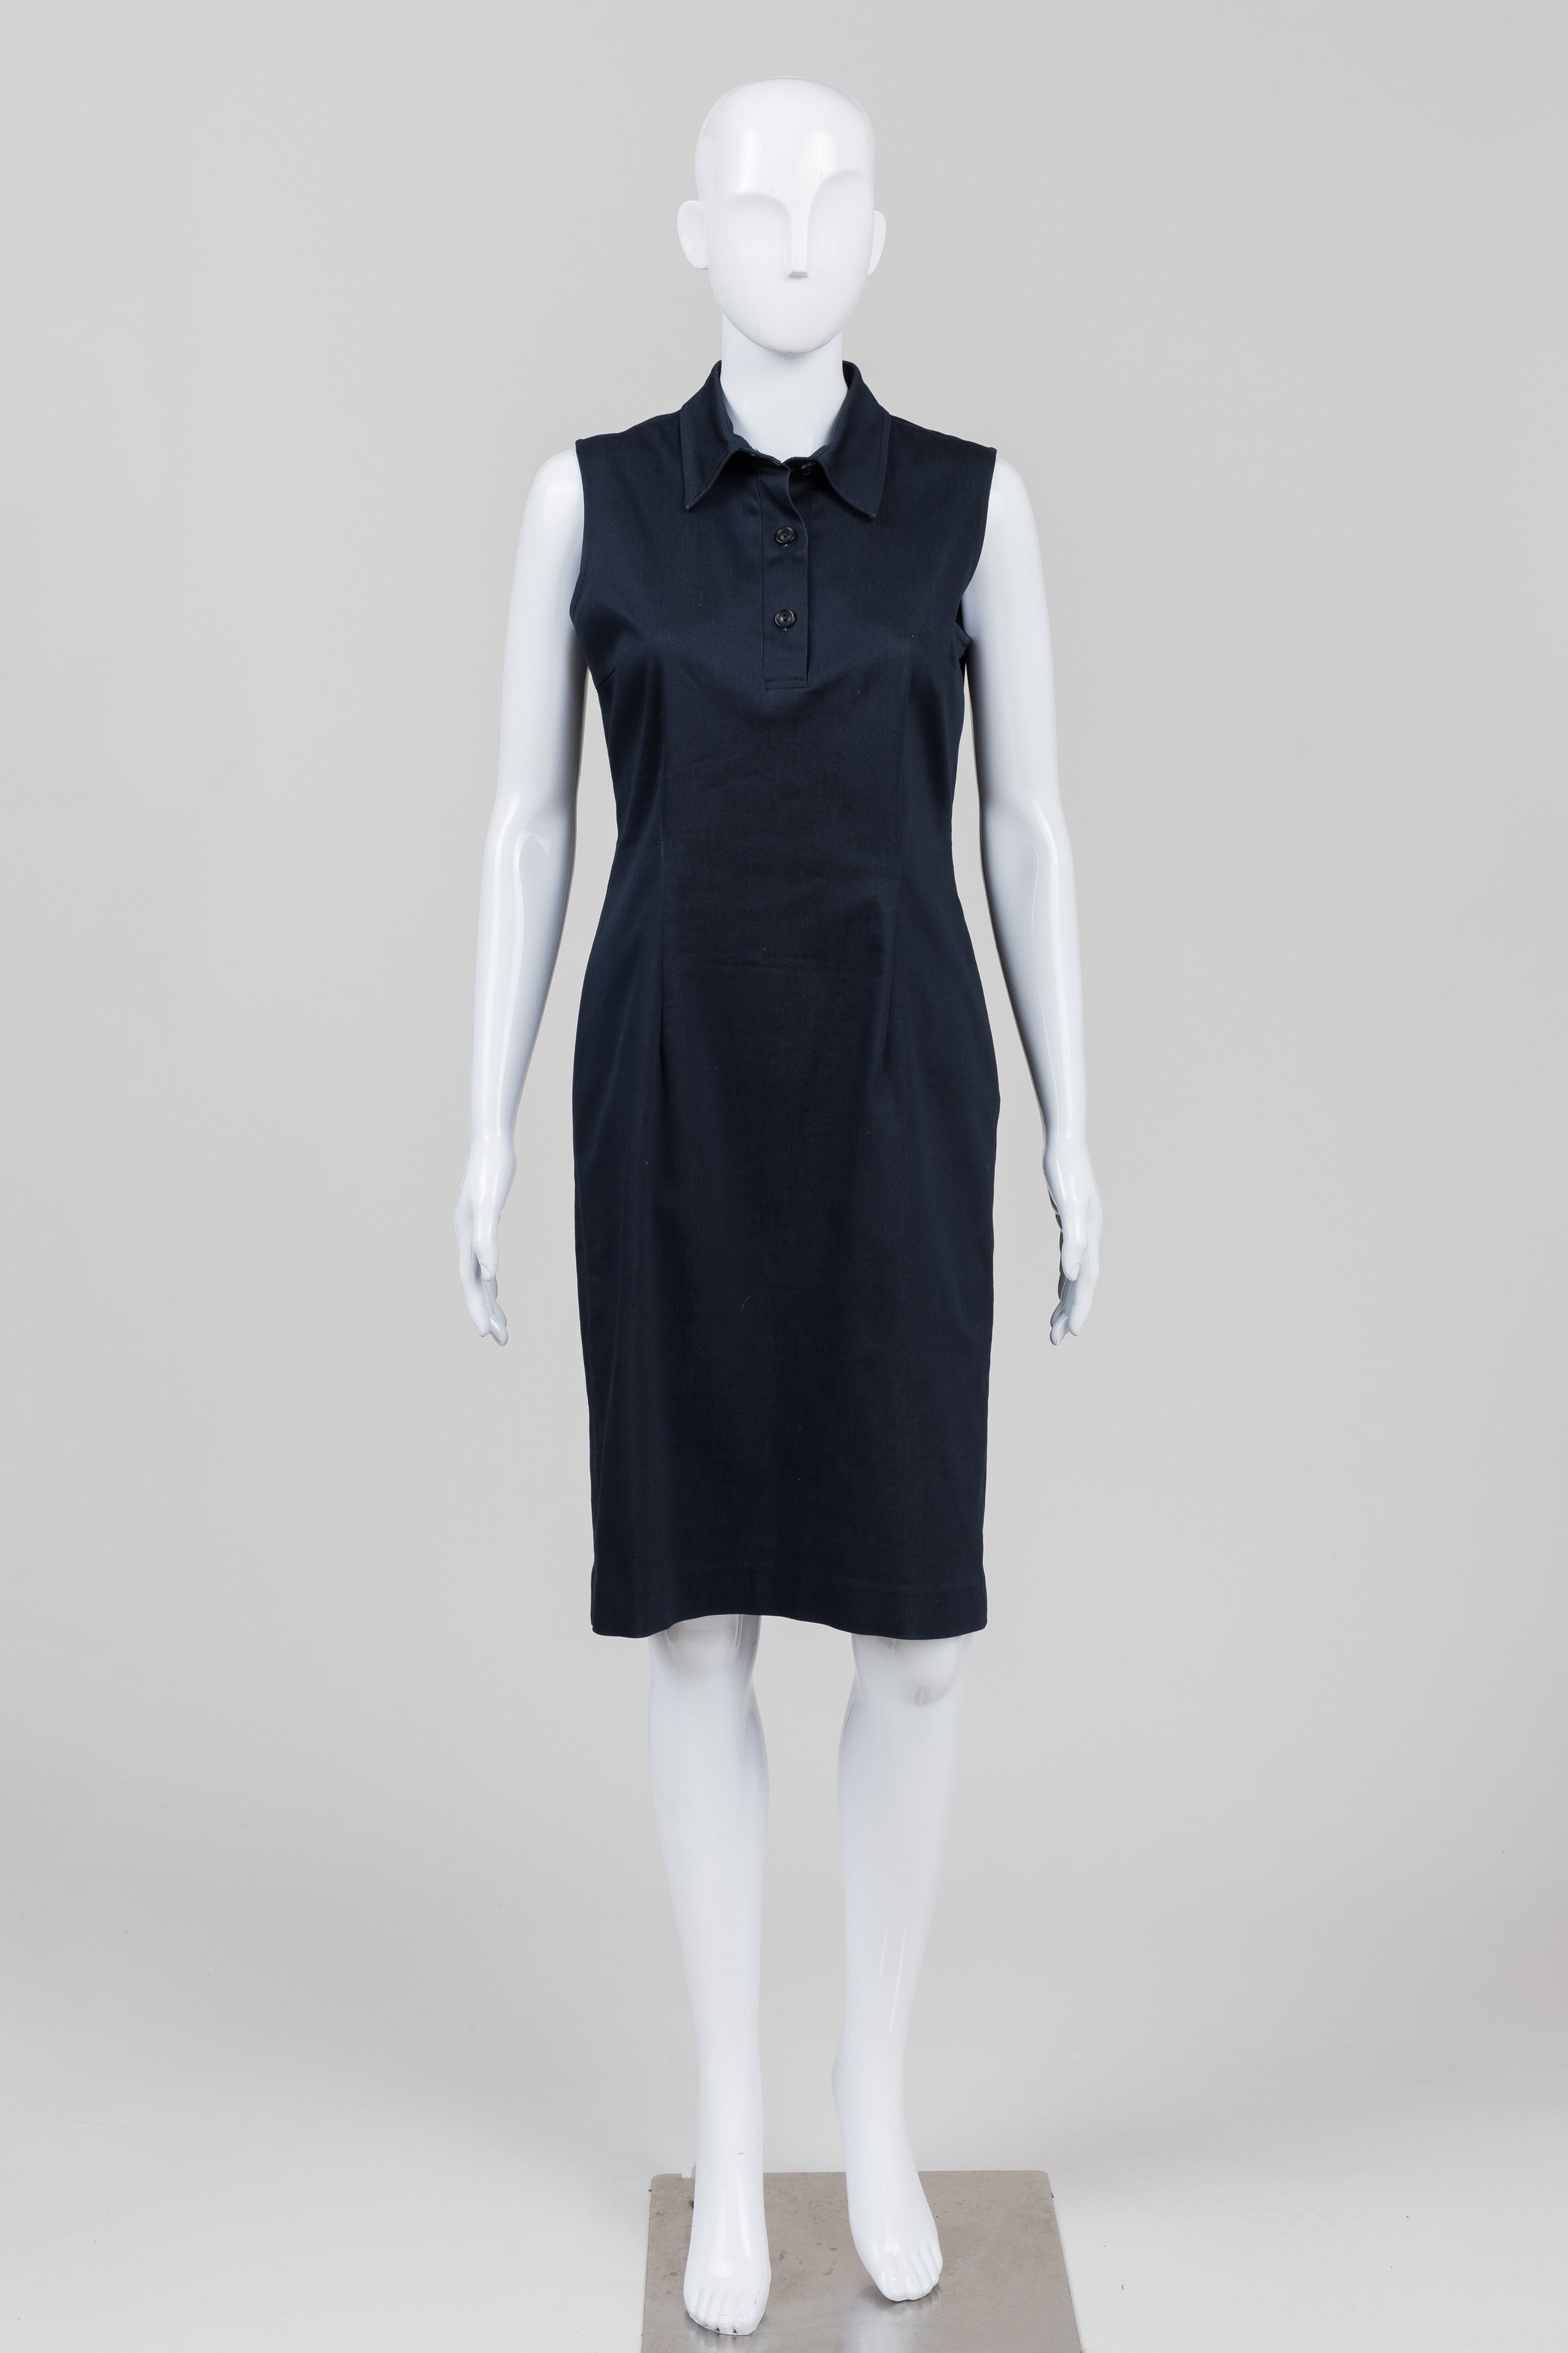 Bogato Vintage Navy Jacket & Sleeveless Collared Dress (2)